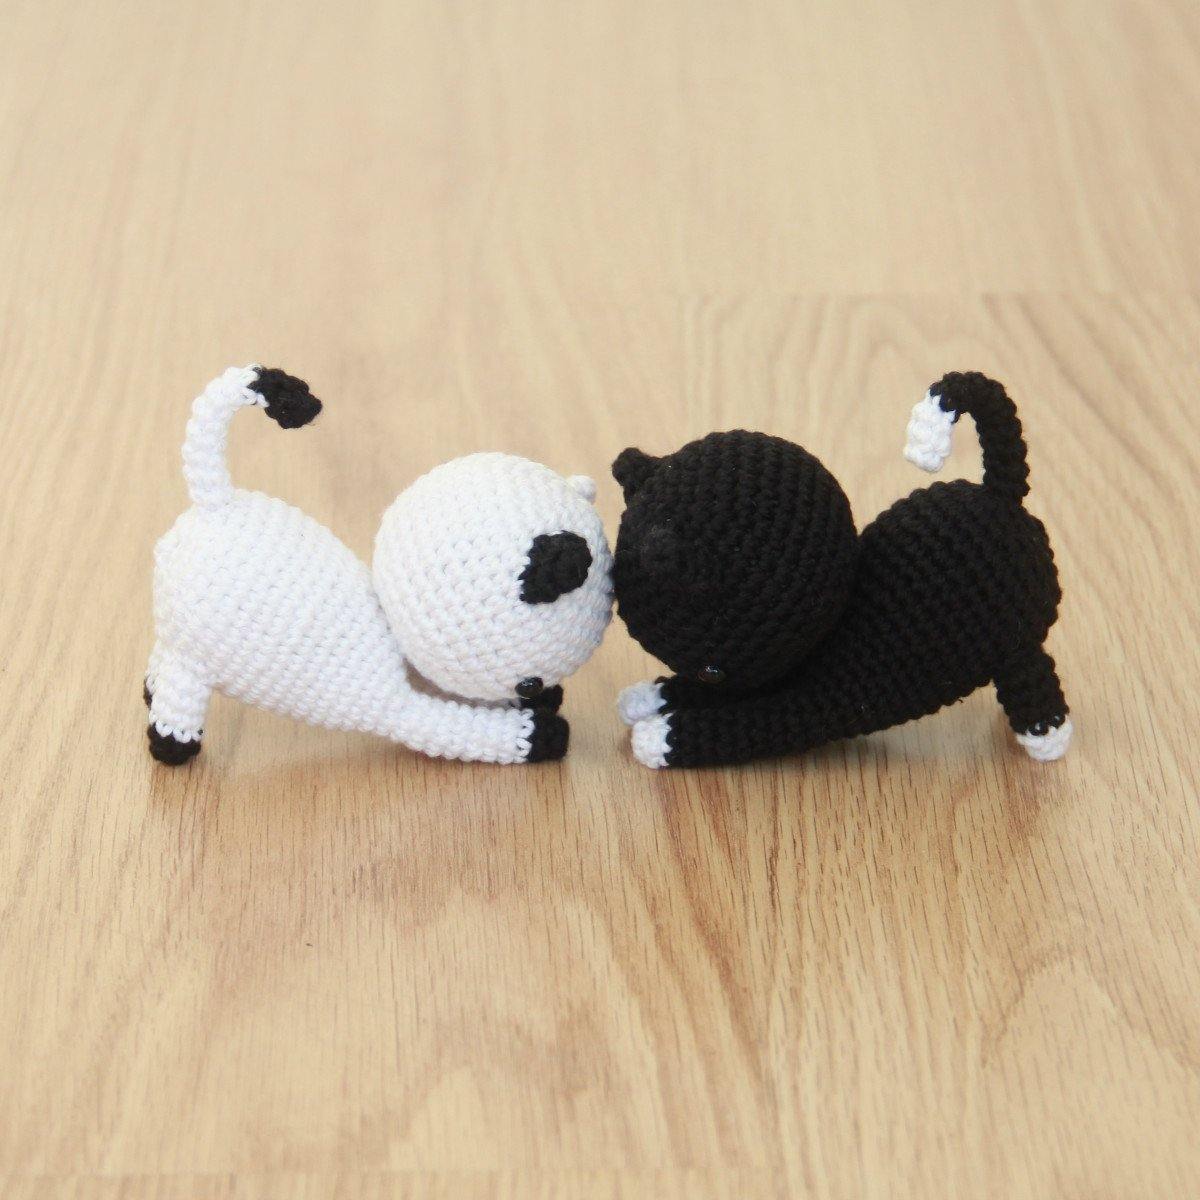 How to Crochet Stuffed Animals: Crochet Puppy Dog & Kitty Cat